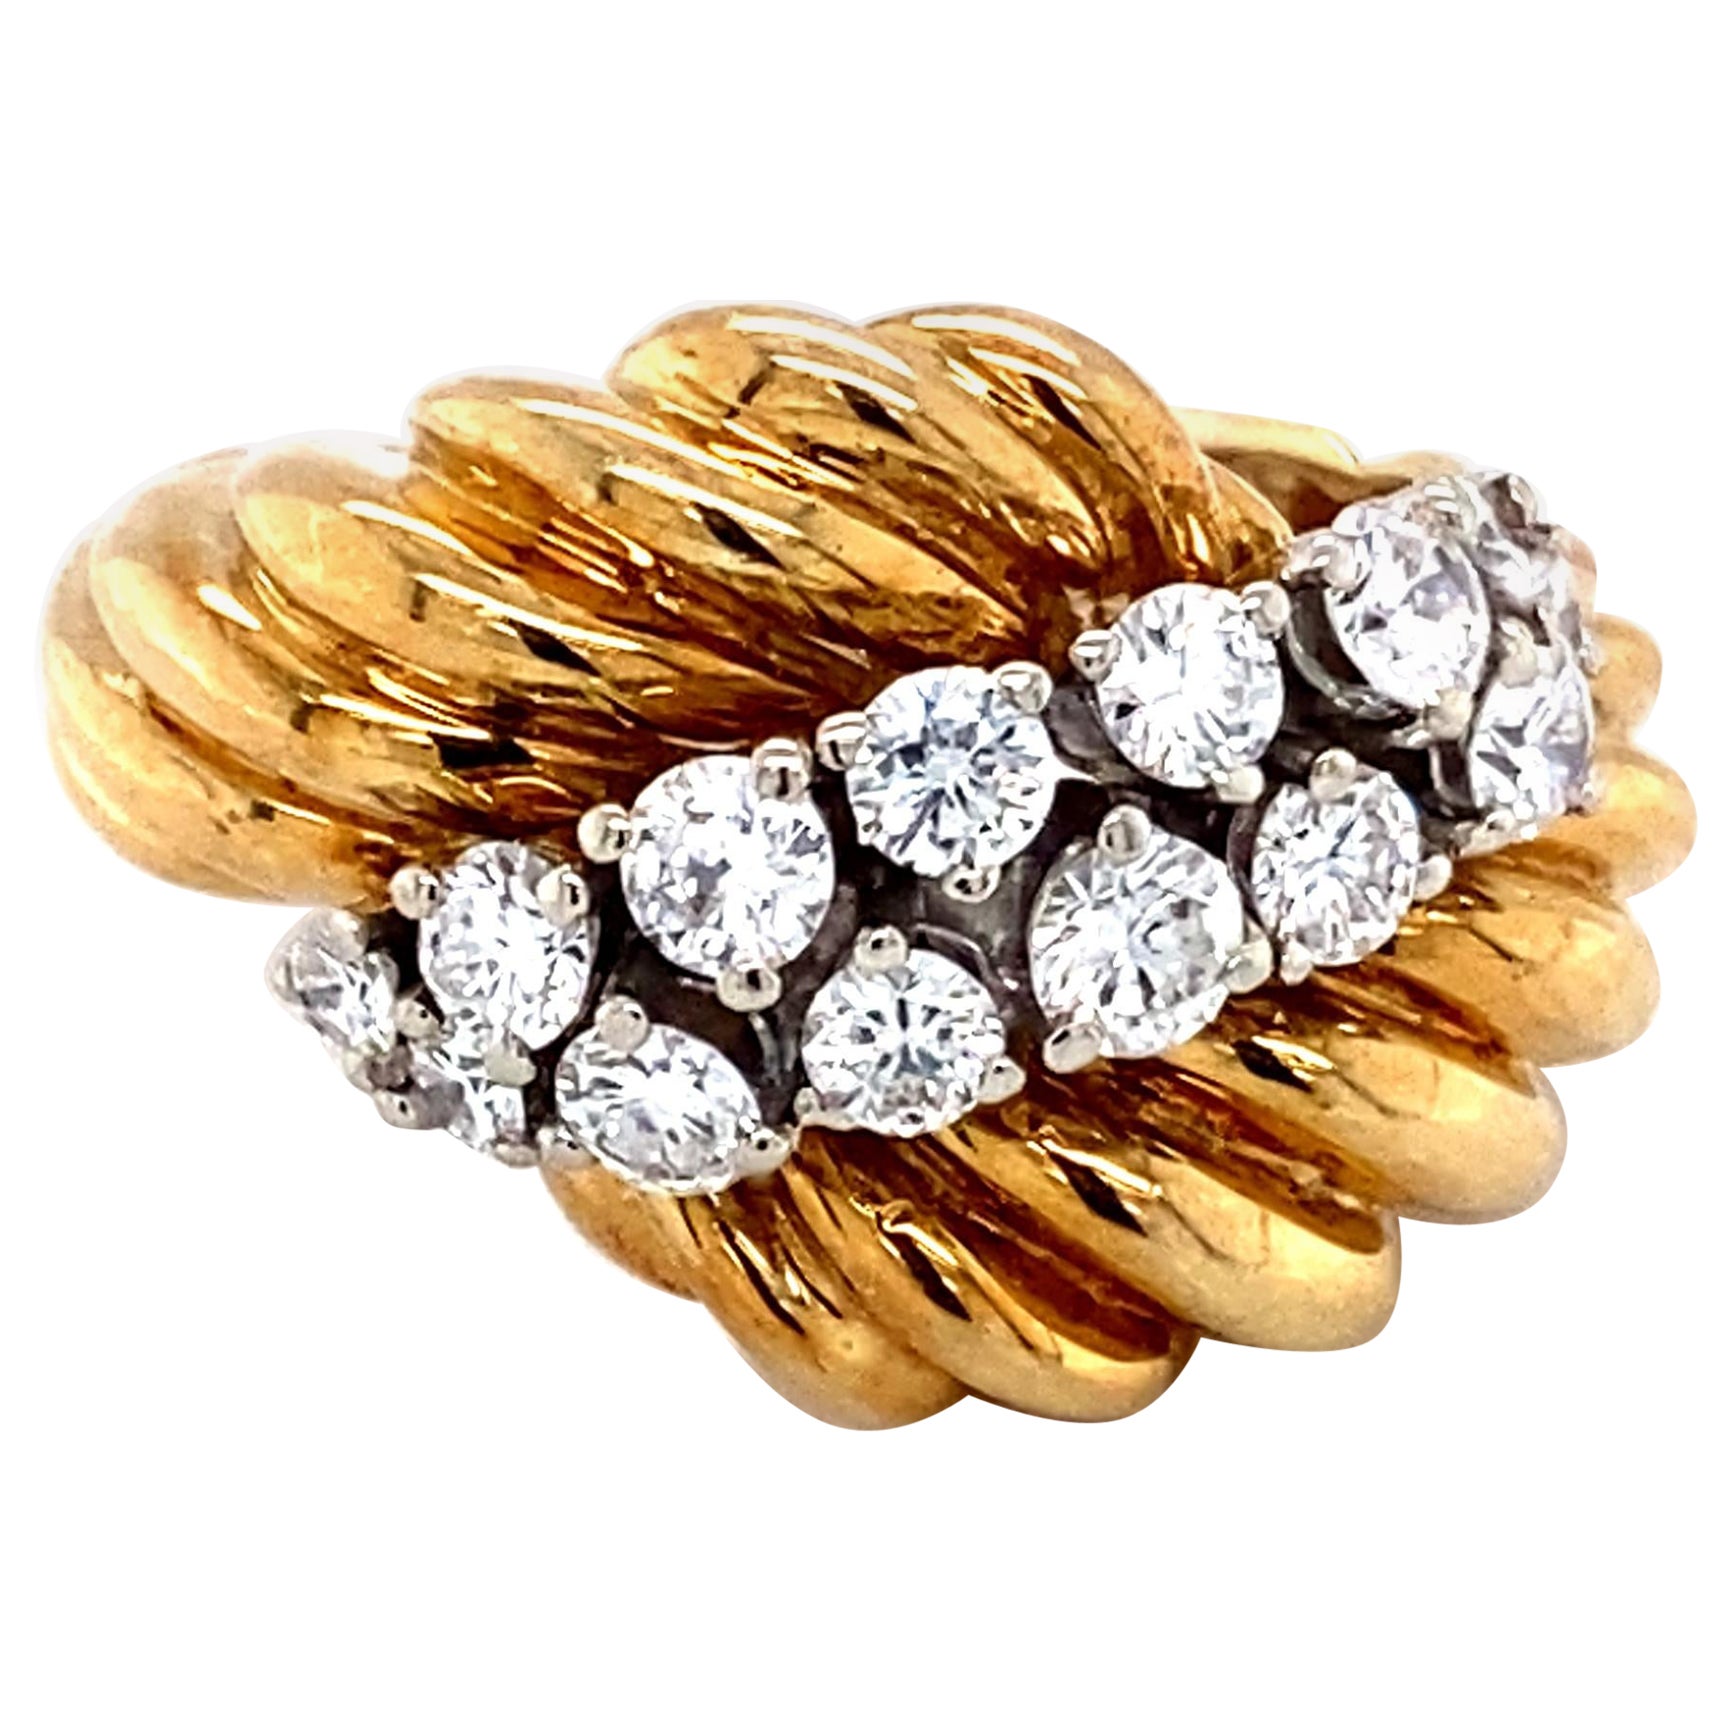 1 Carat Diamond Ring in 18 Karat Two-Tone Gold For Sale